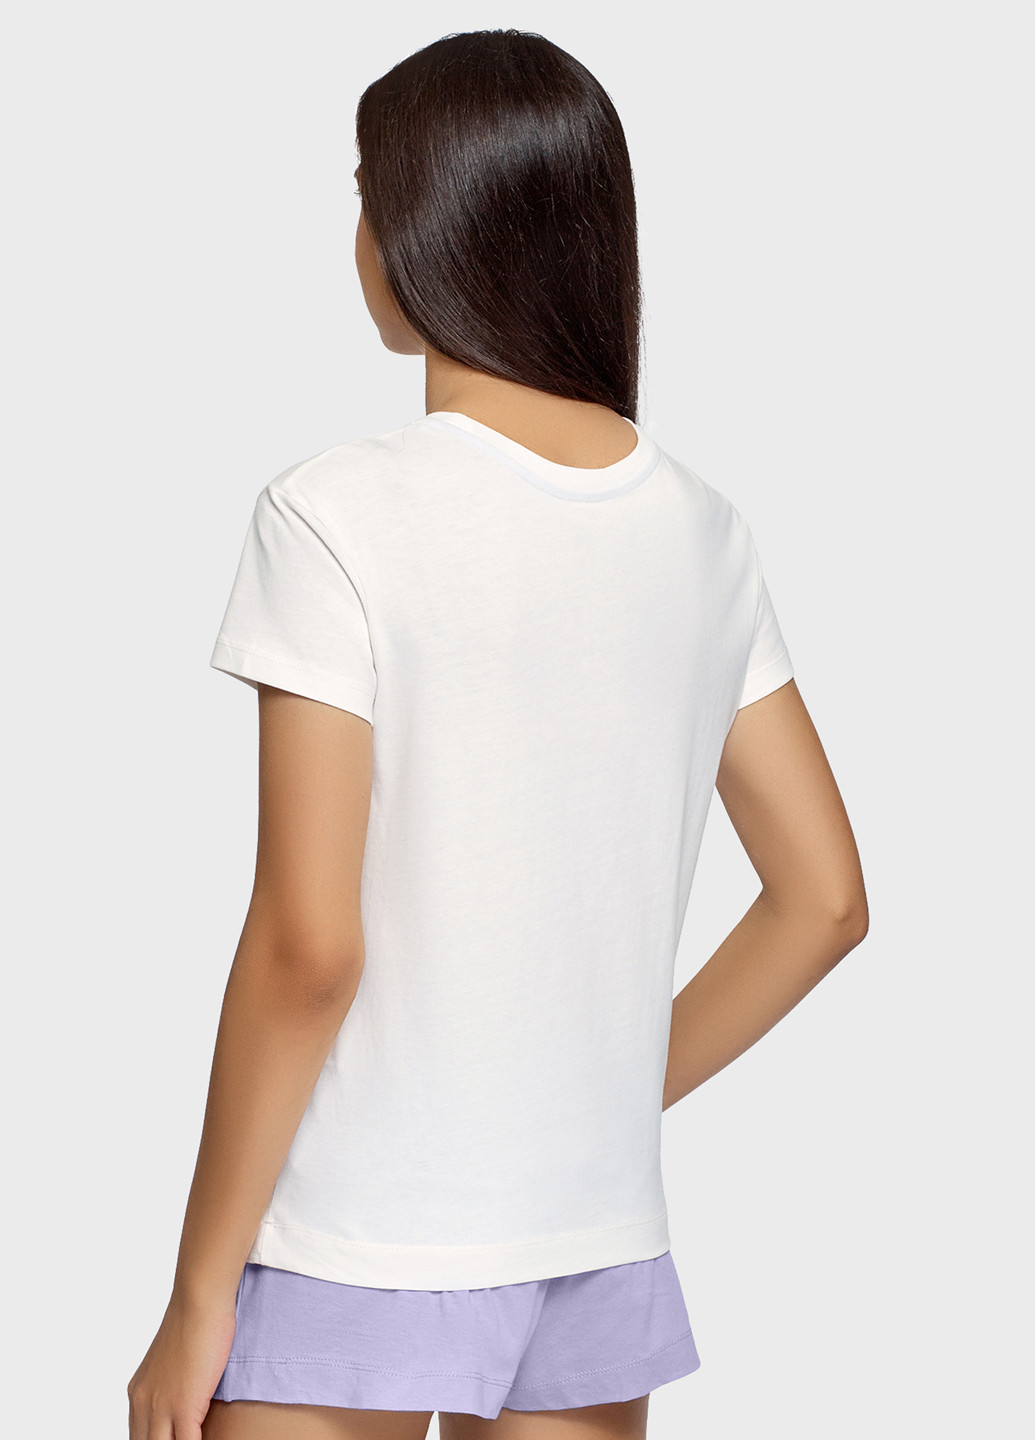 Белая всесезон пижама (футболка, шорты) футболка + шорты Oodji